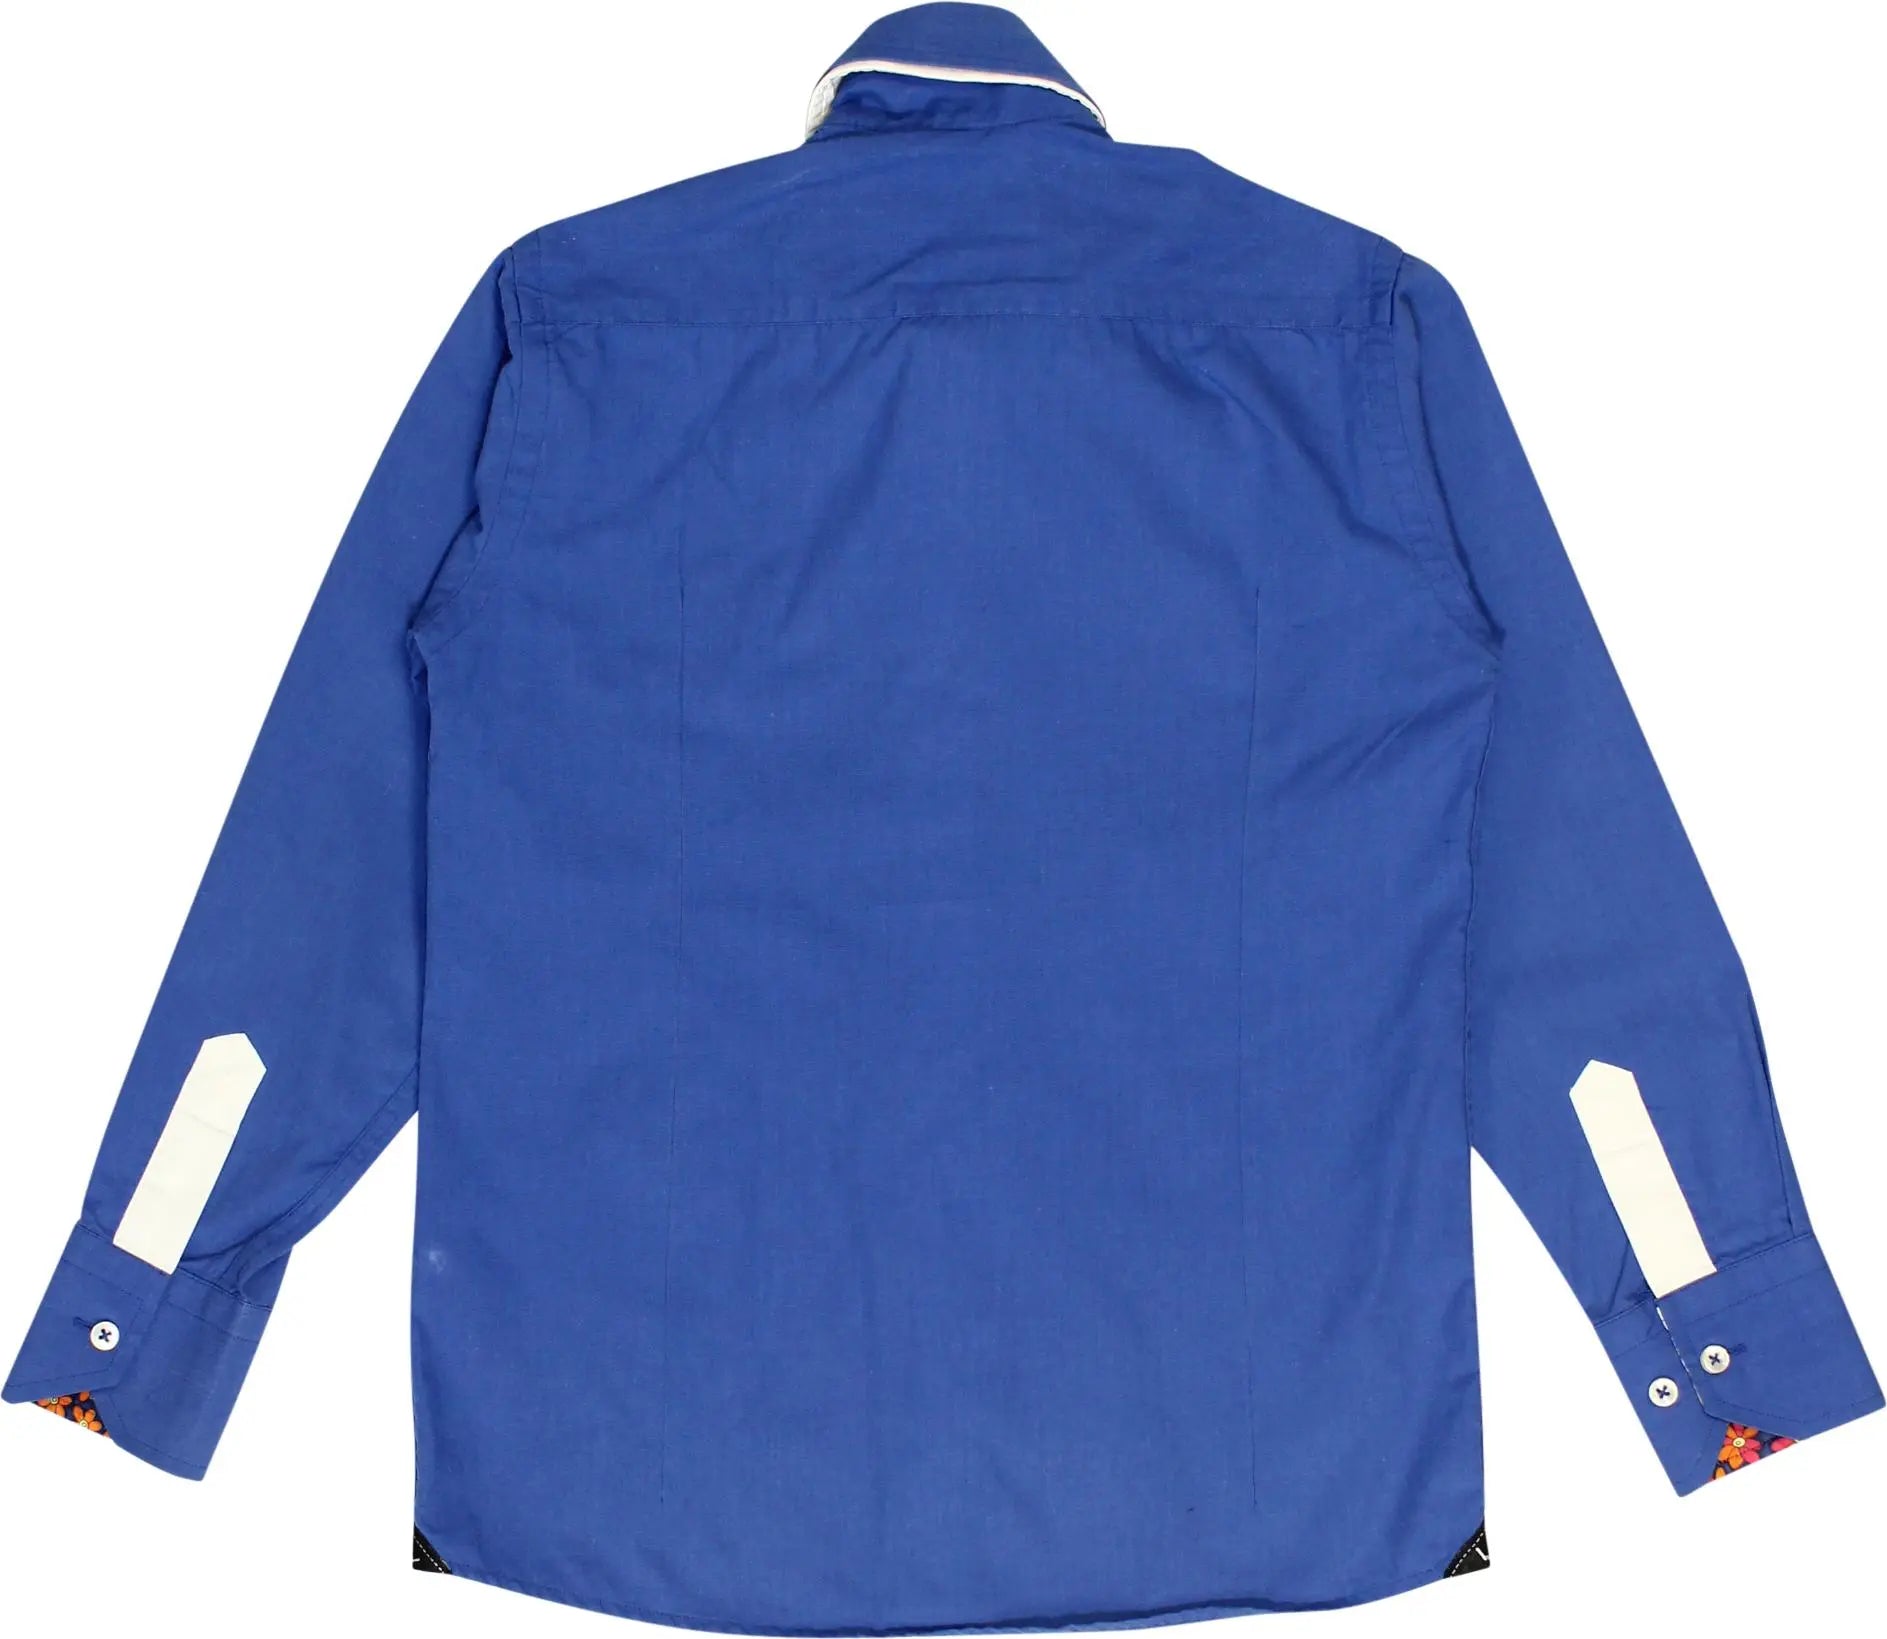 WAM Denim - Blue Shirt- ThriftTale.com - Vintage and second handclothing